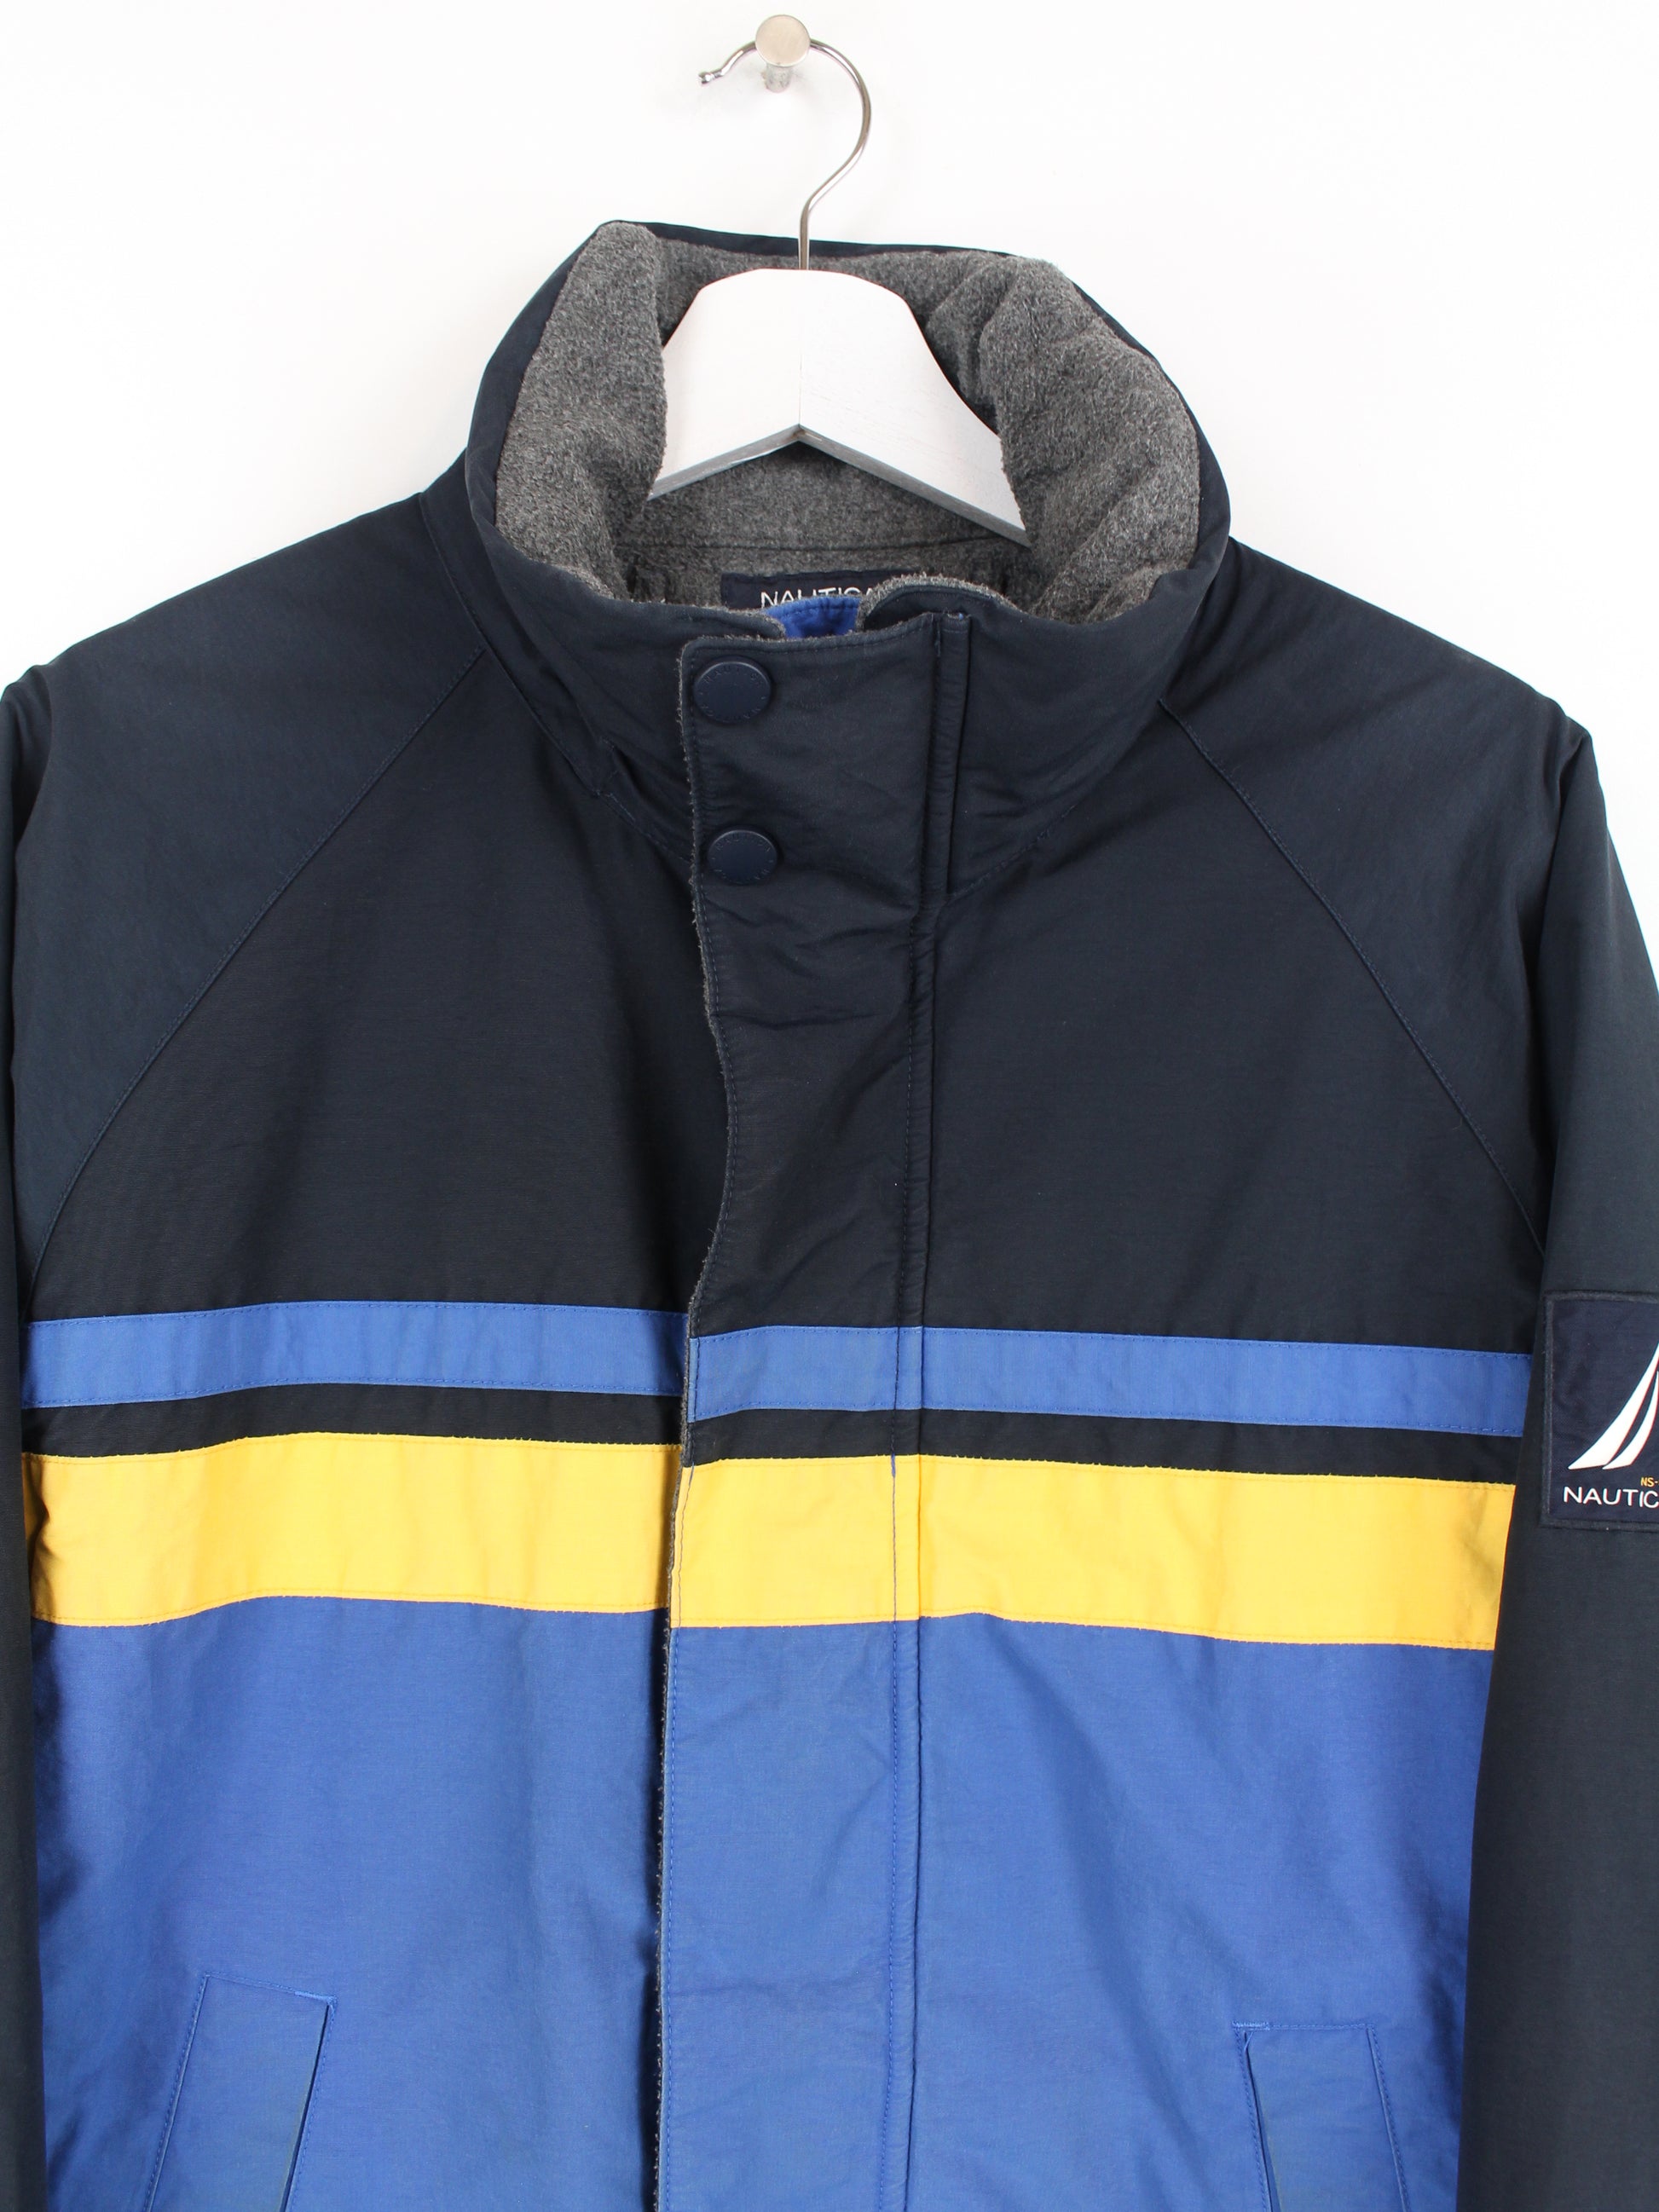 Nautica Reversible Jacket Blue / Gray S – Peeces